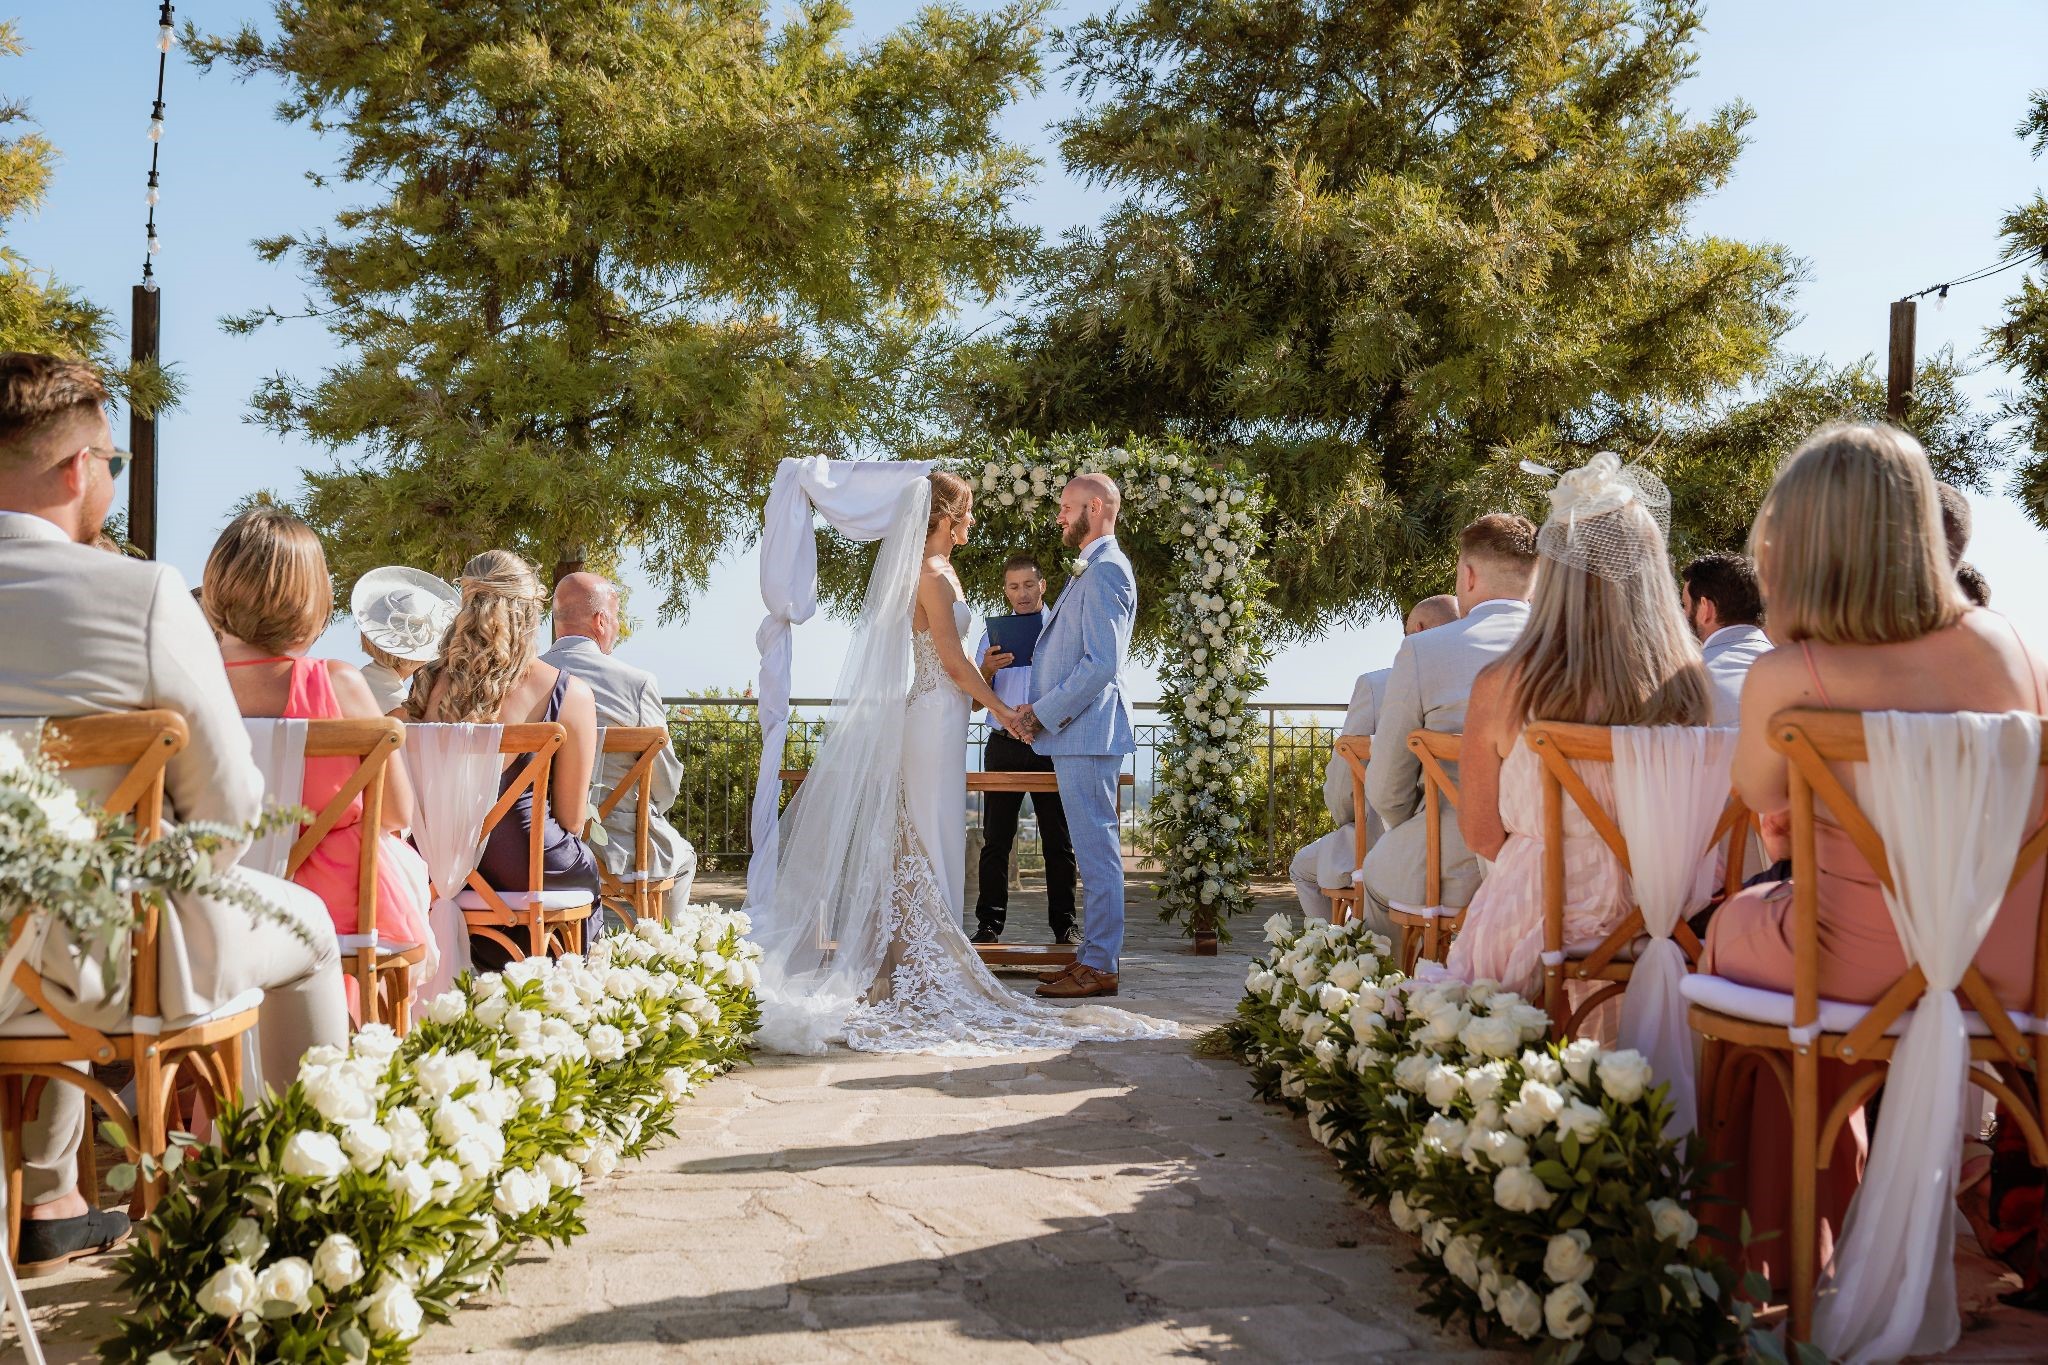 Liopetro Real Wedding - venue weding fowers